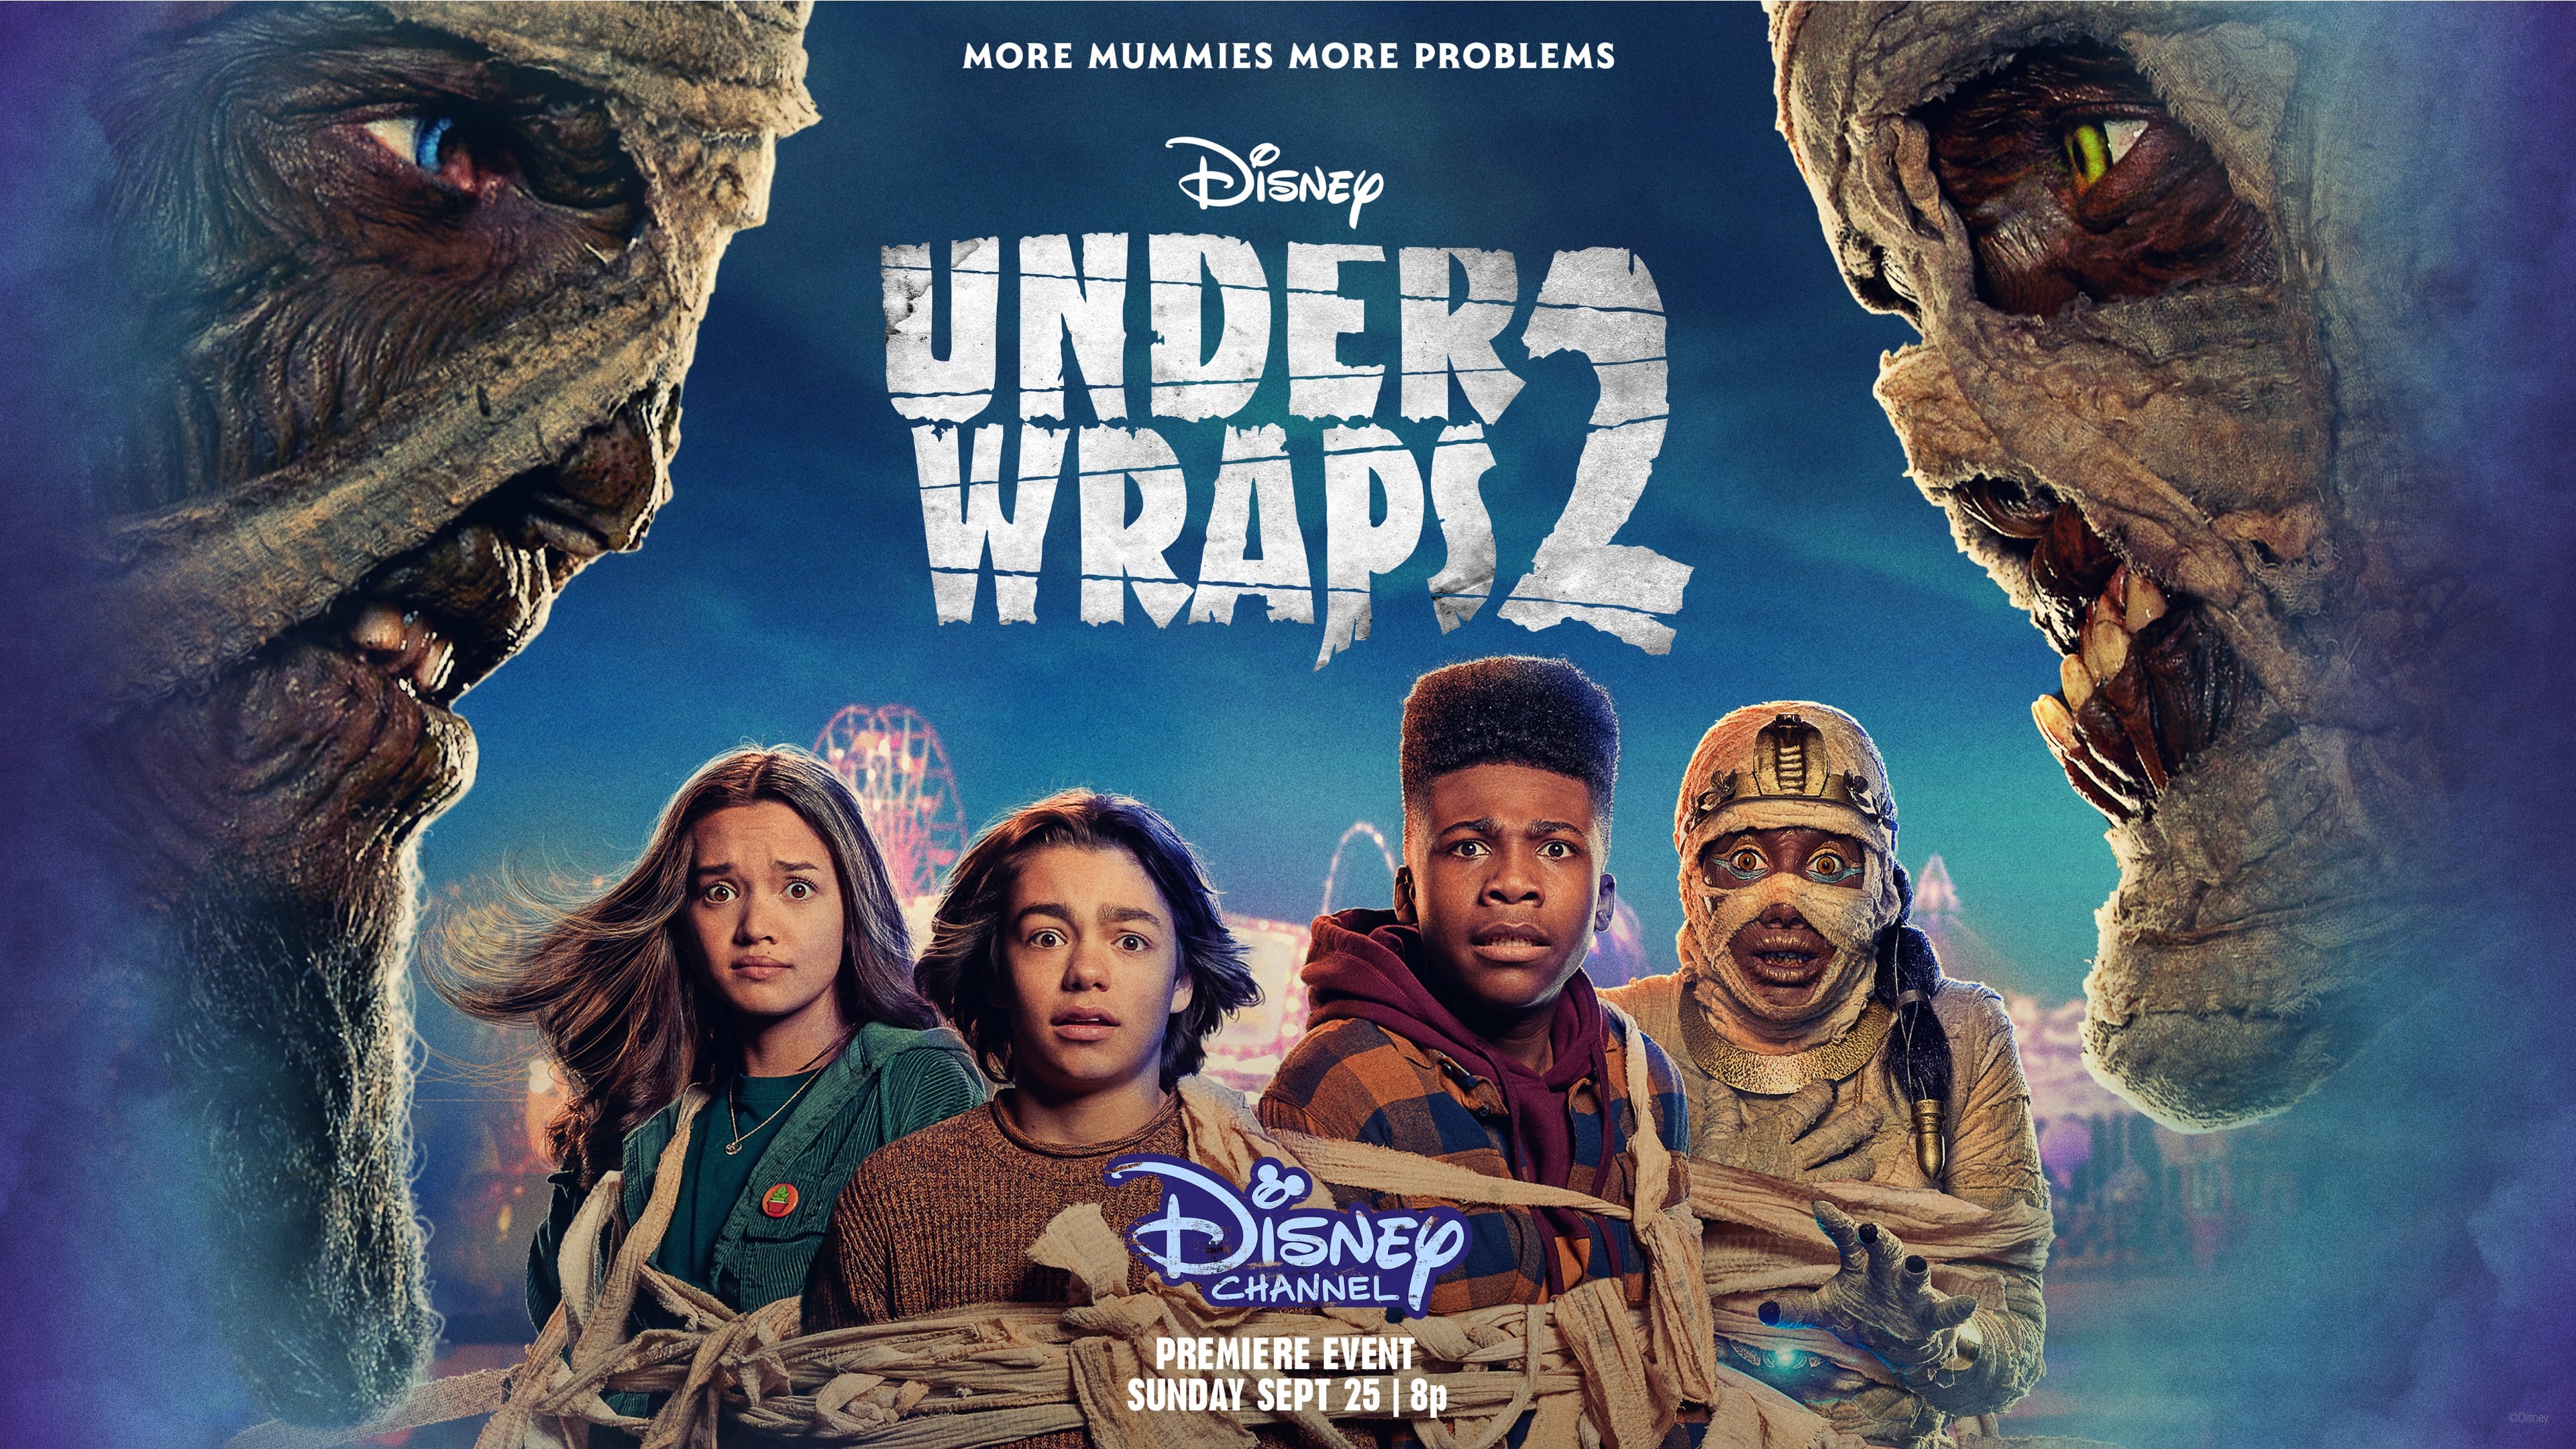 Under Wraps 2 (2022)